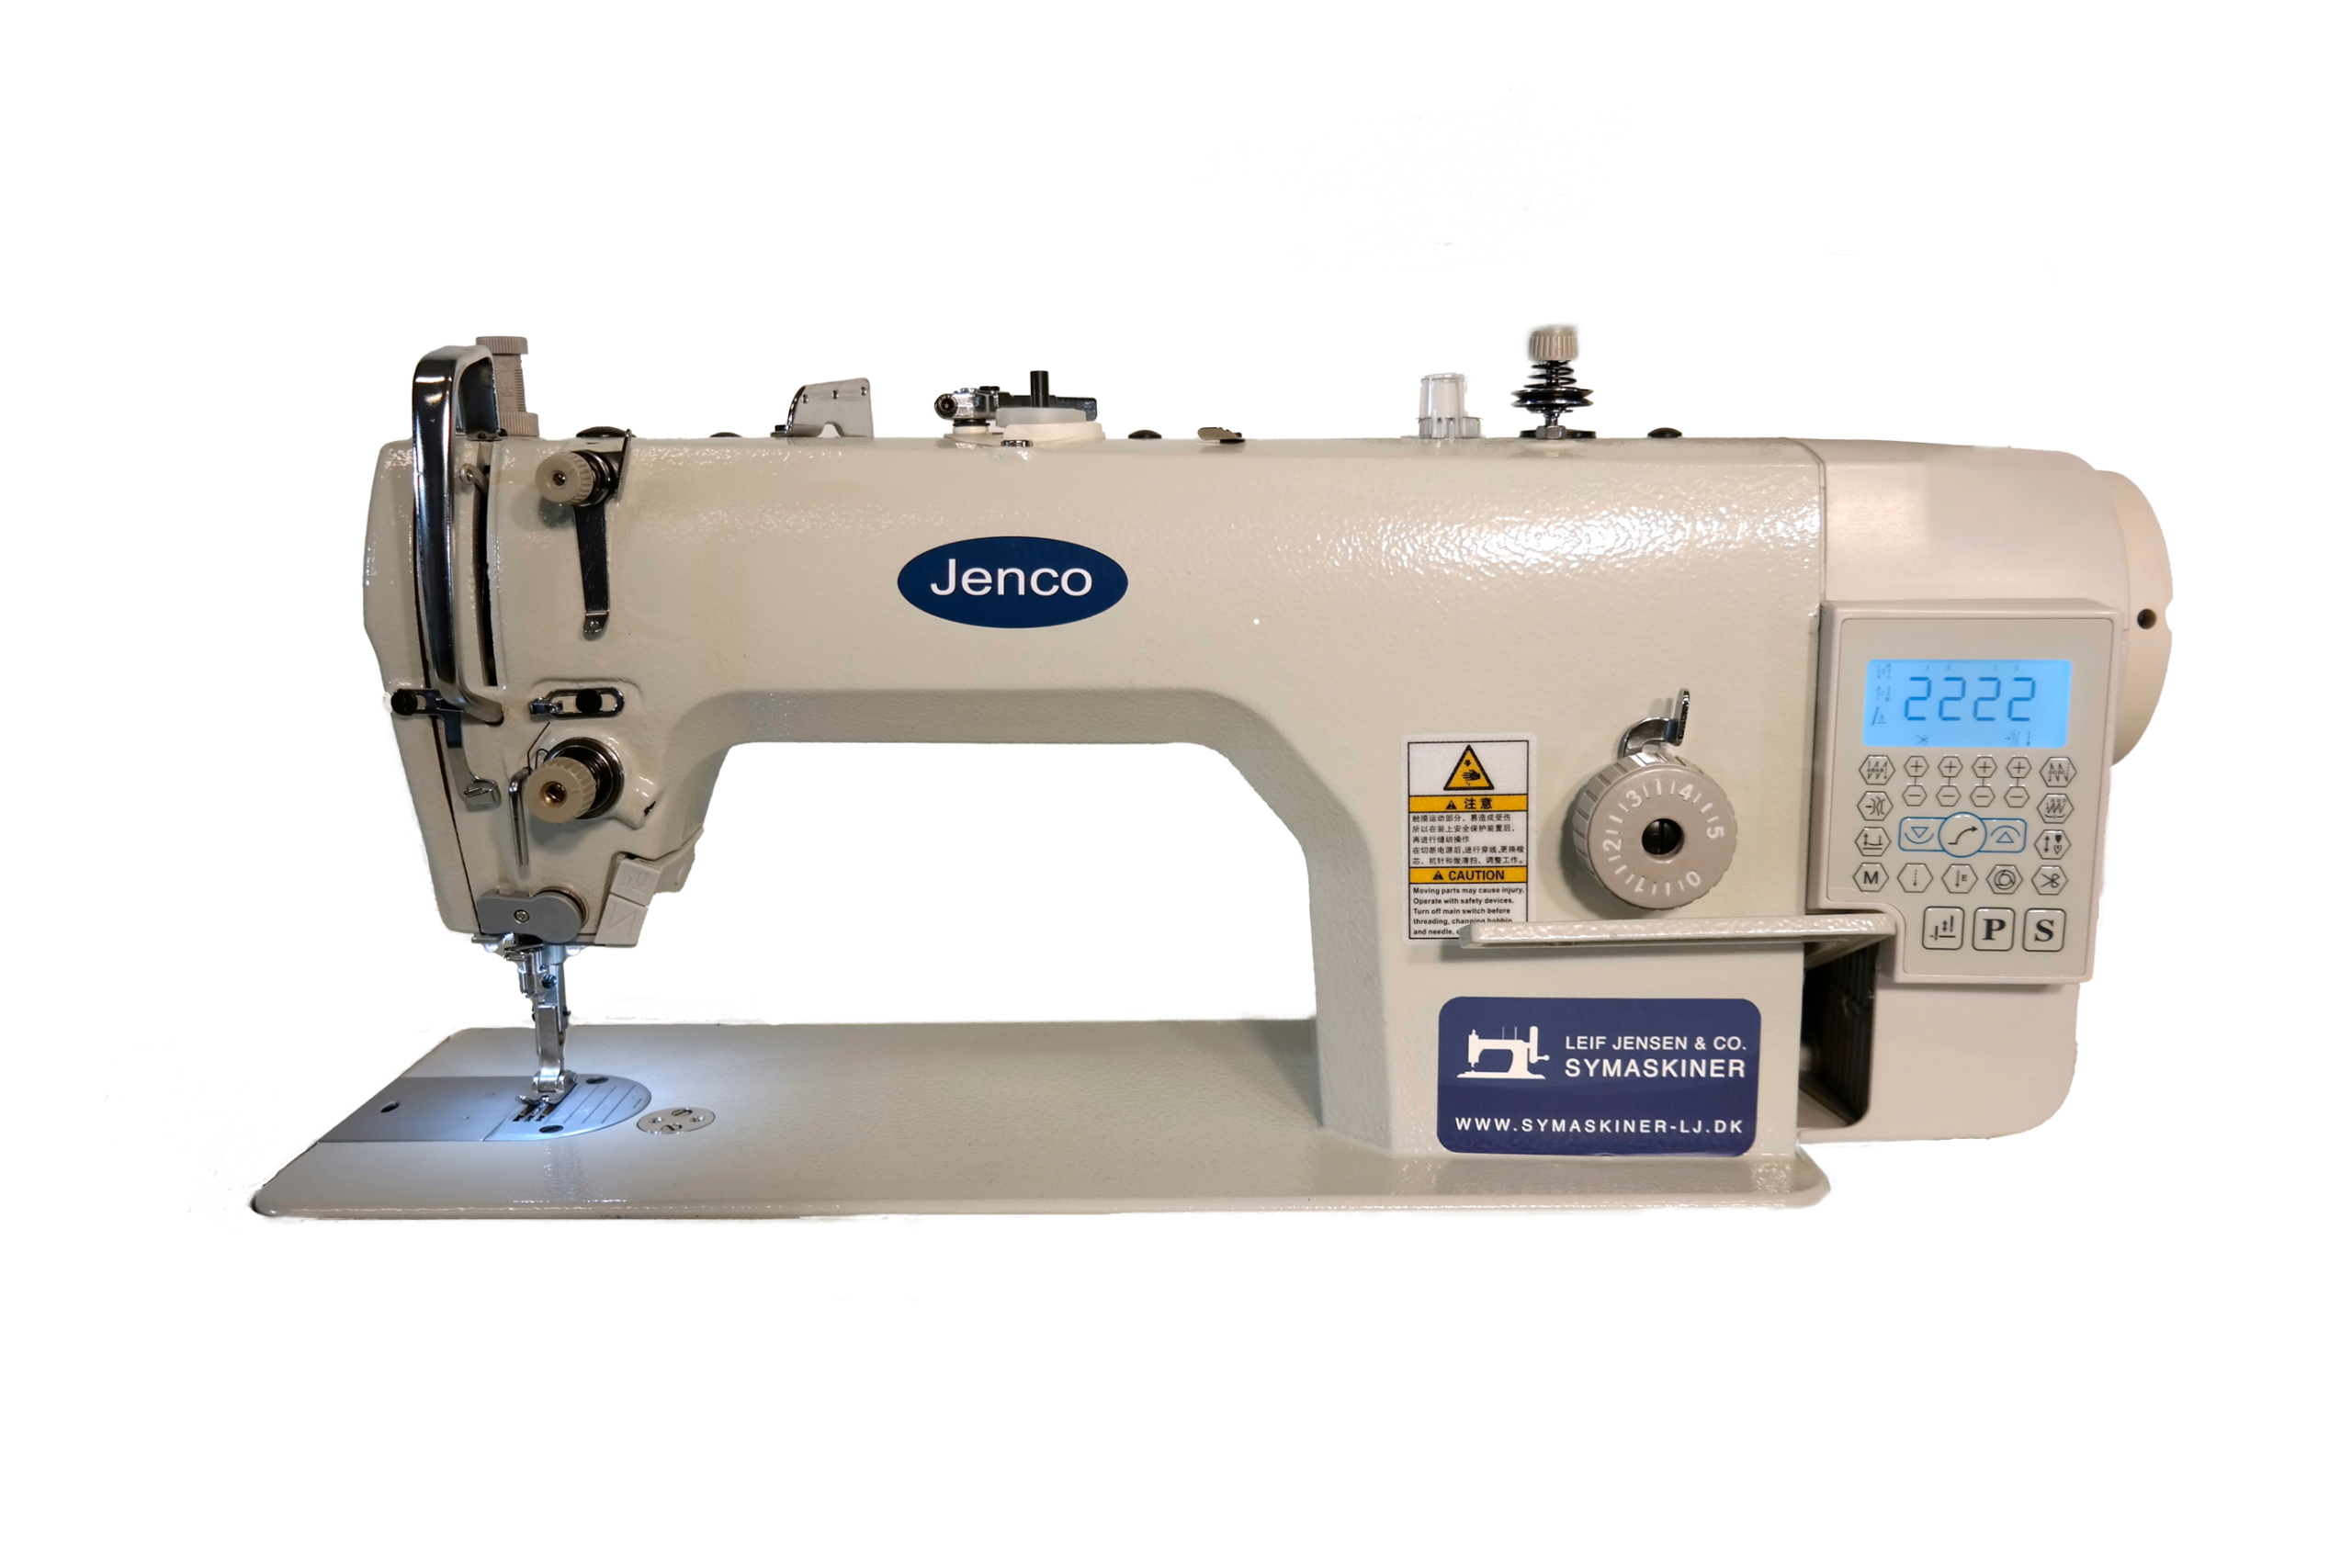 Jenco-9900